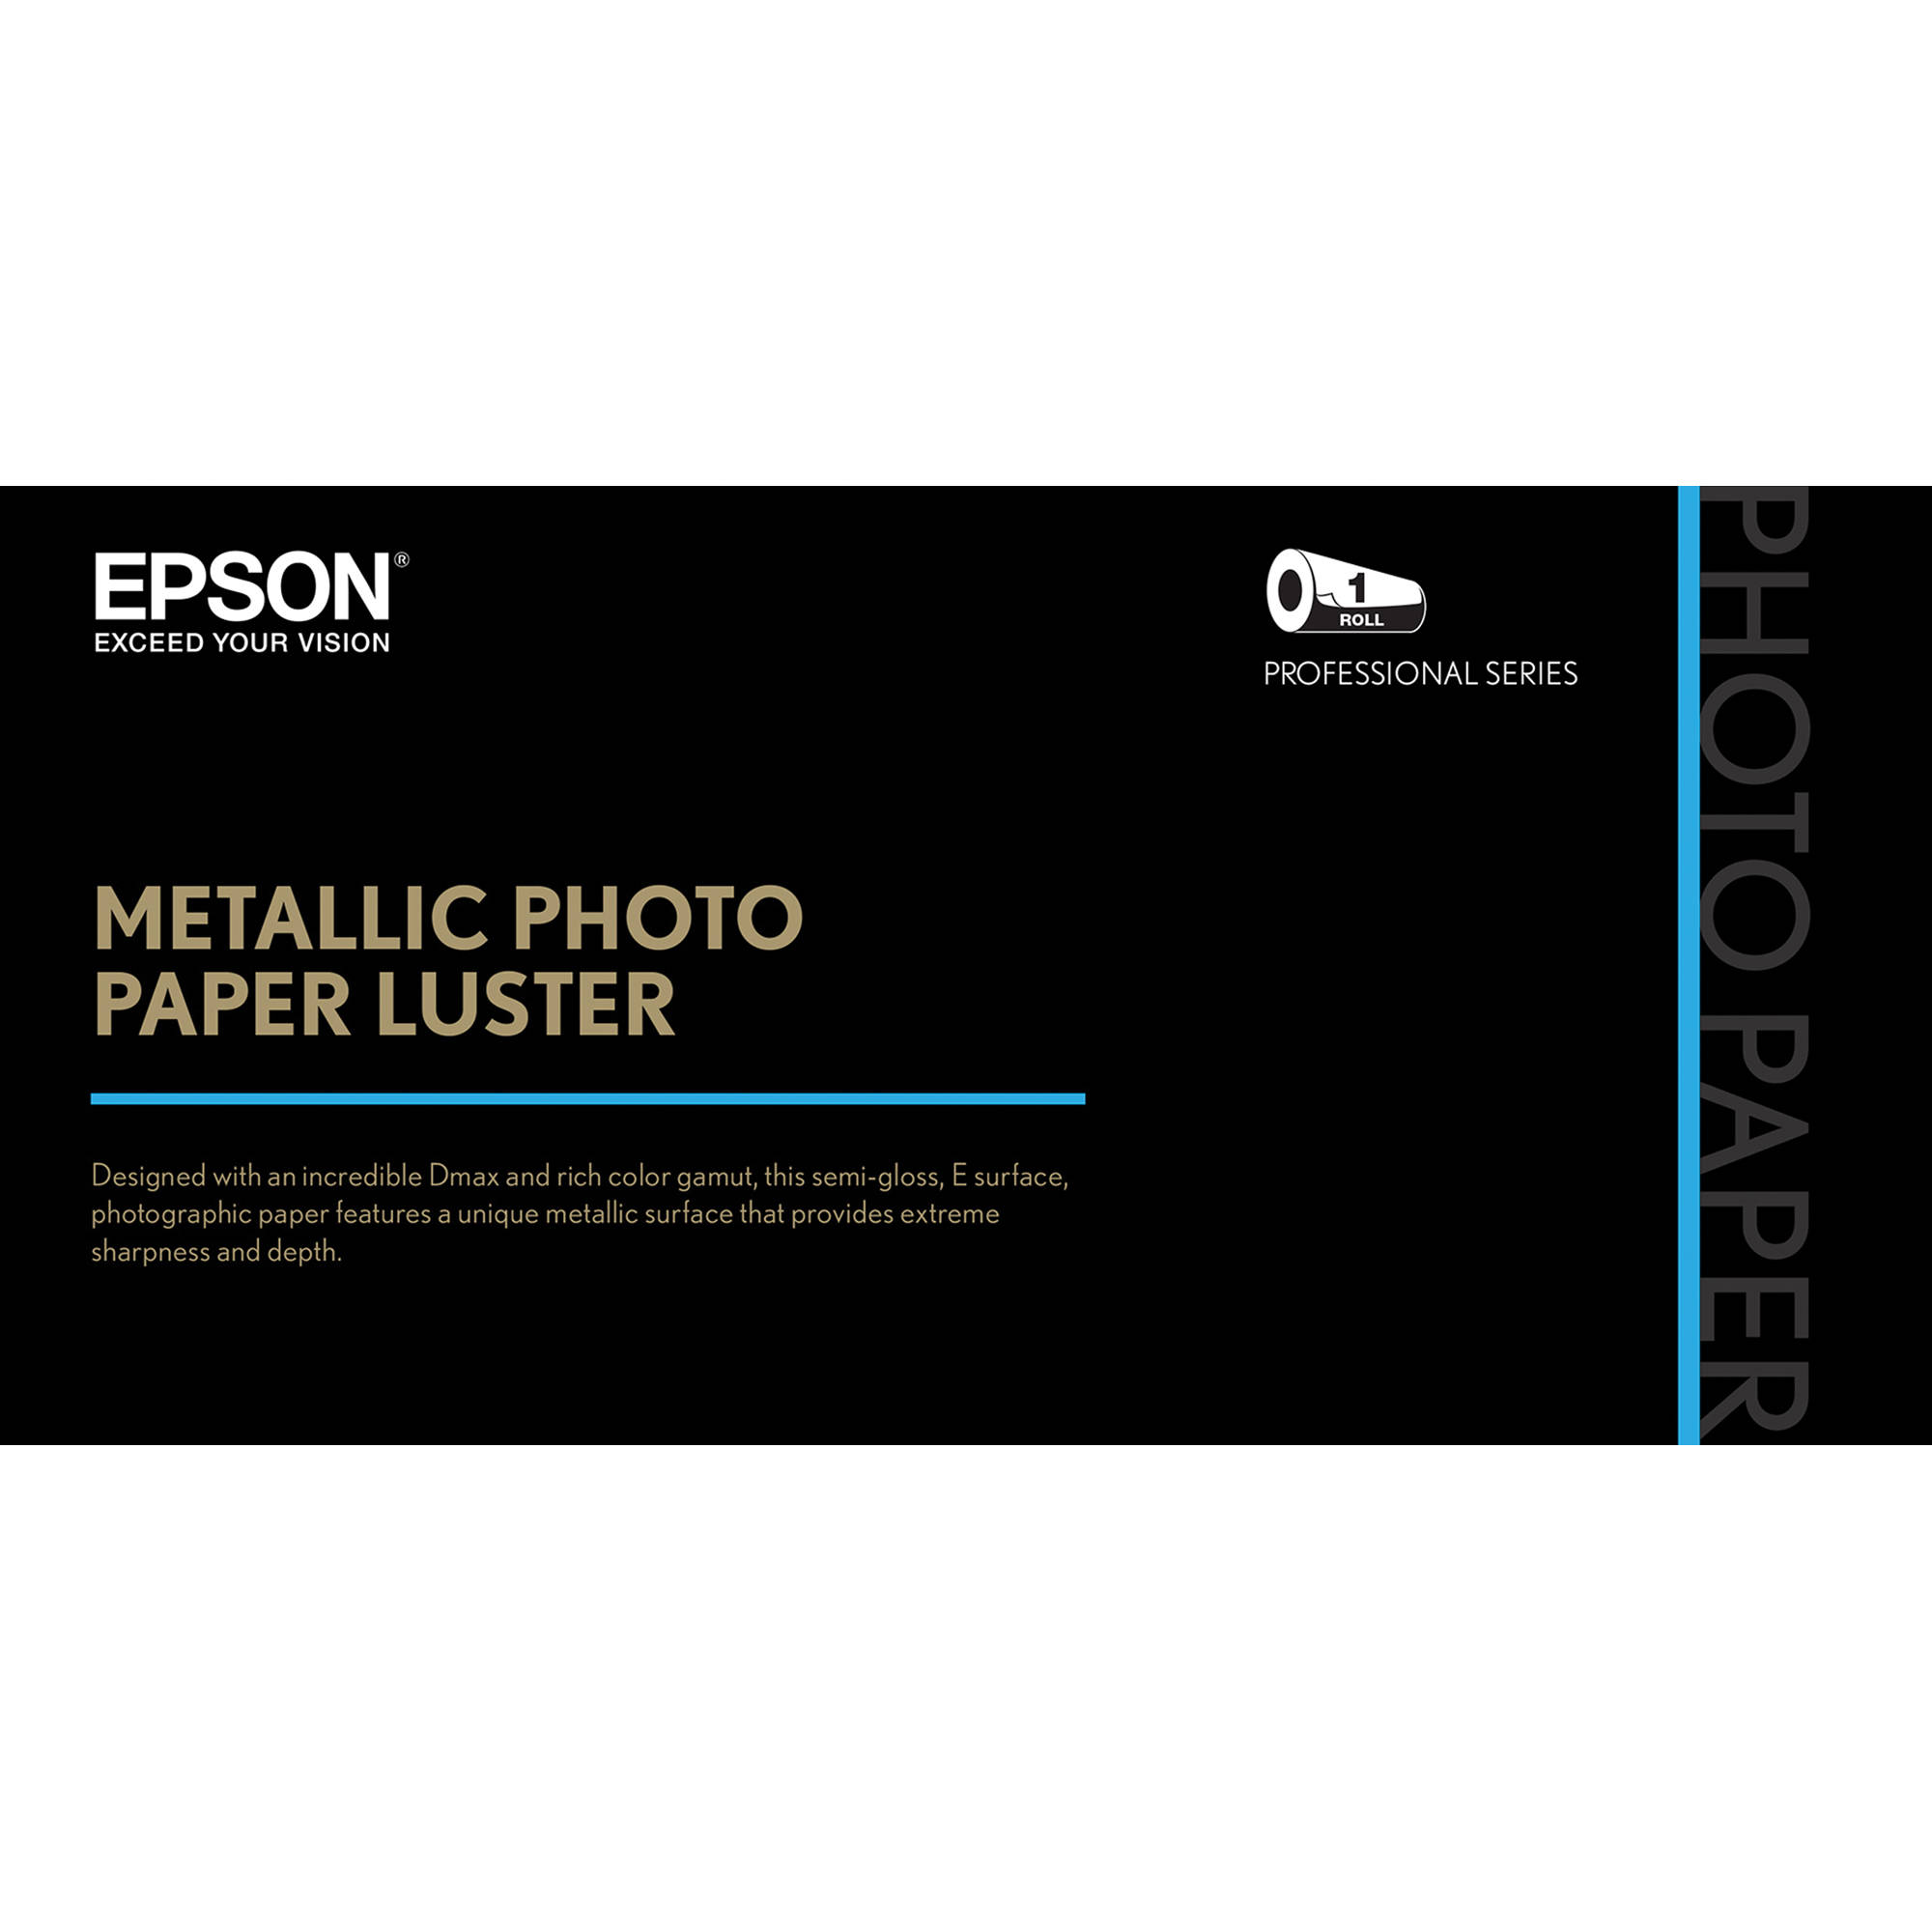 Epson Metallic Photo Paper Luster (44" x 100', 1 Roll)